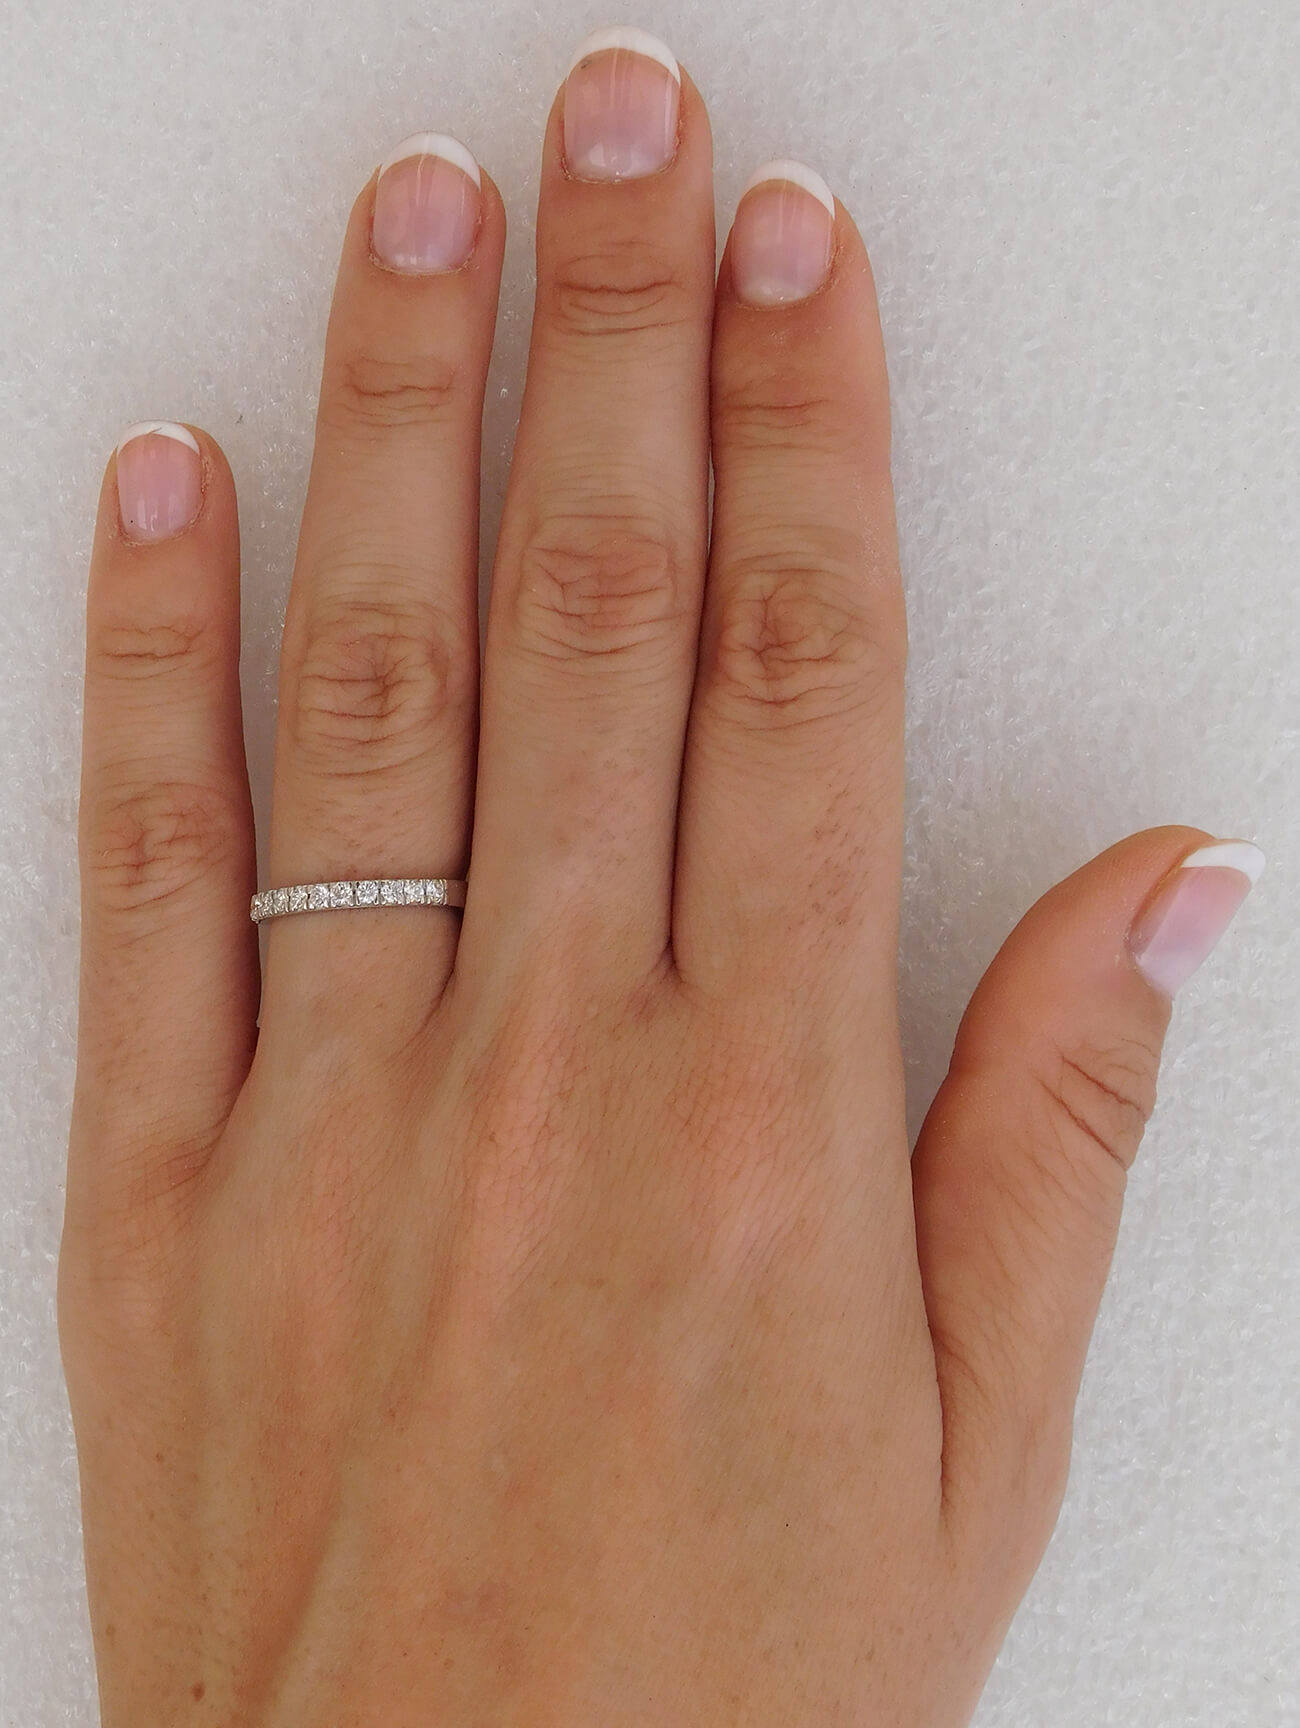 Erin Half Eternity Diamond Ring